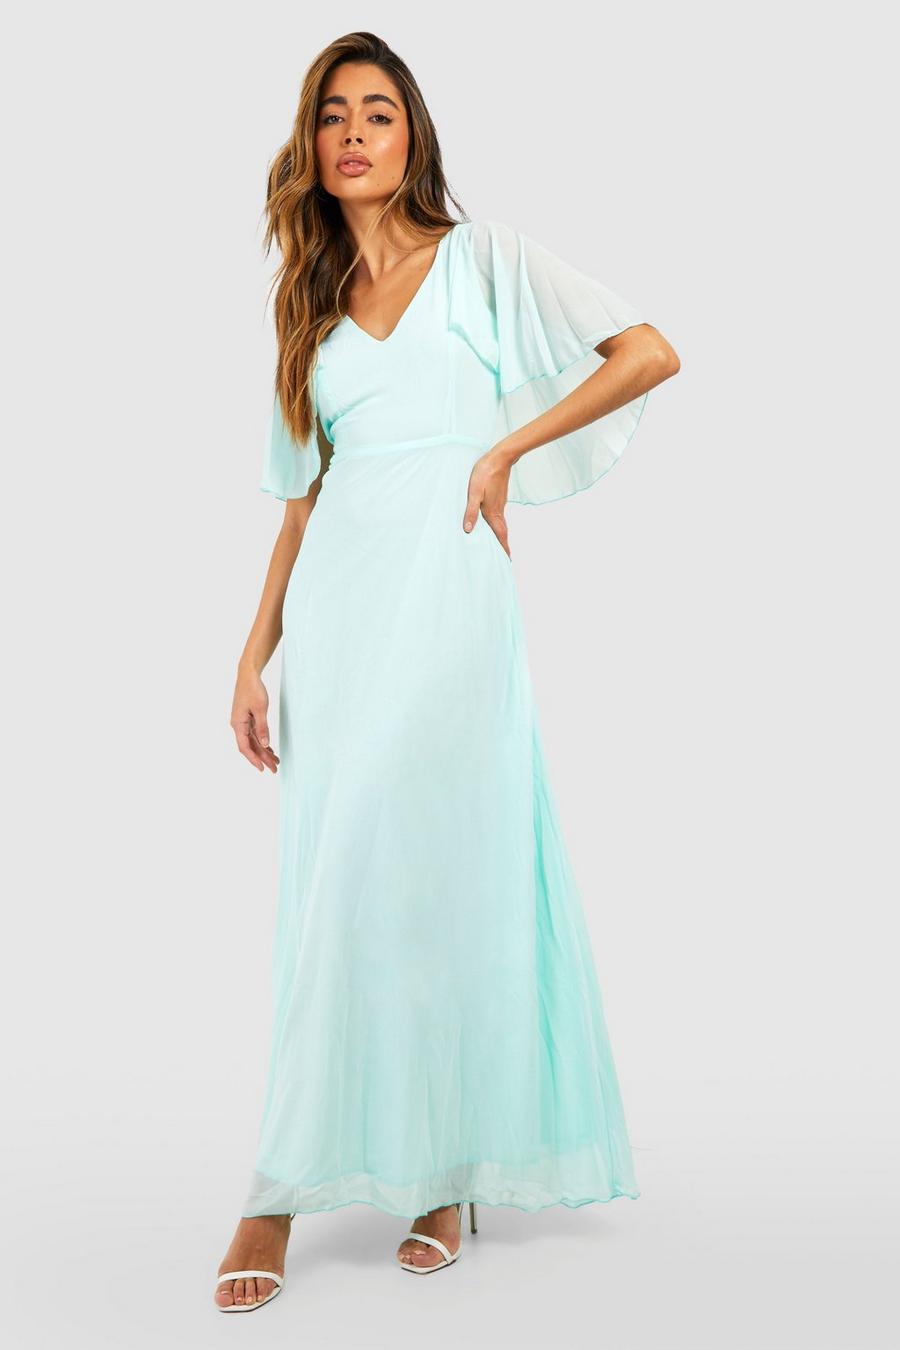 Mint Chiffon Cape Sleeve Maxi Bridesmaid Dress